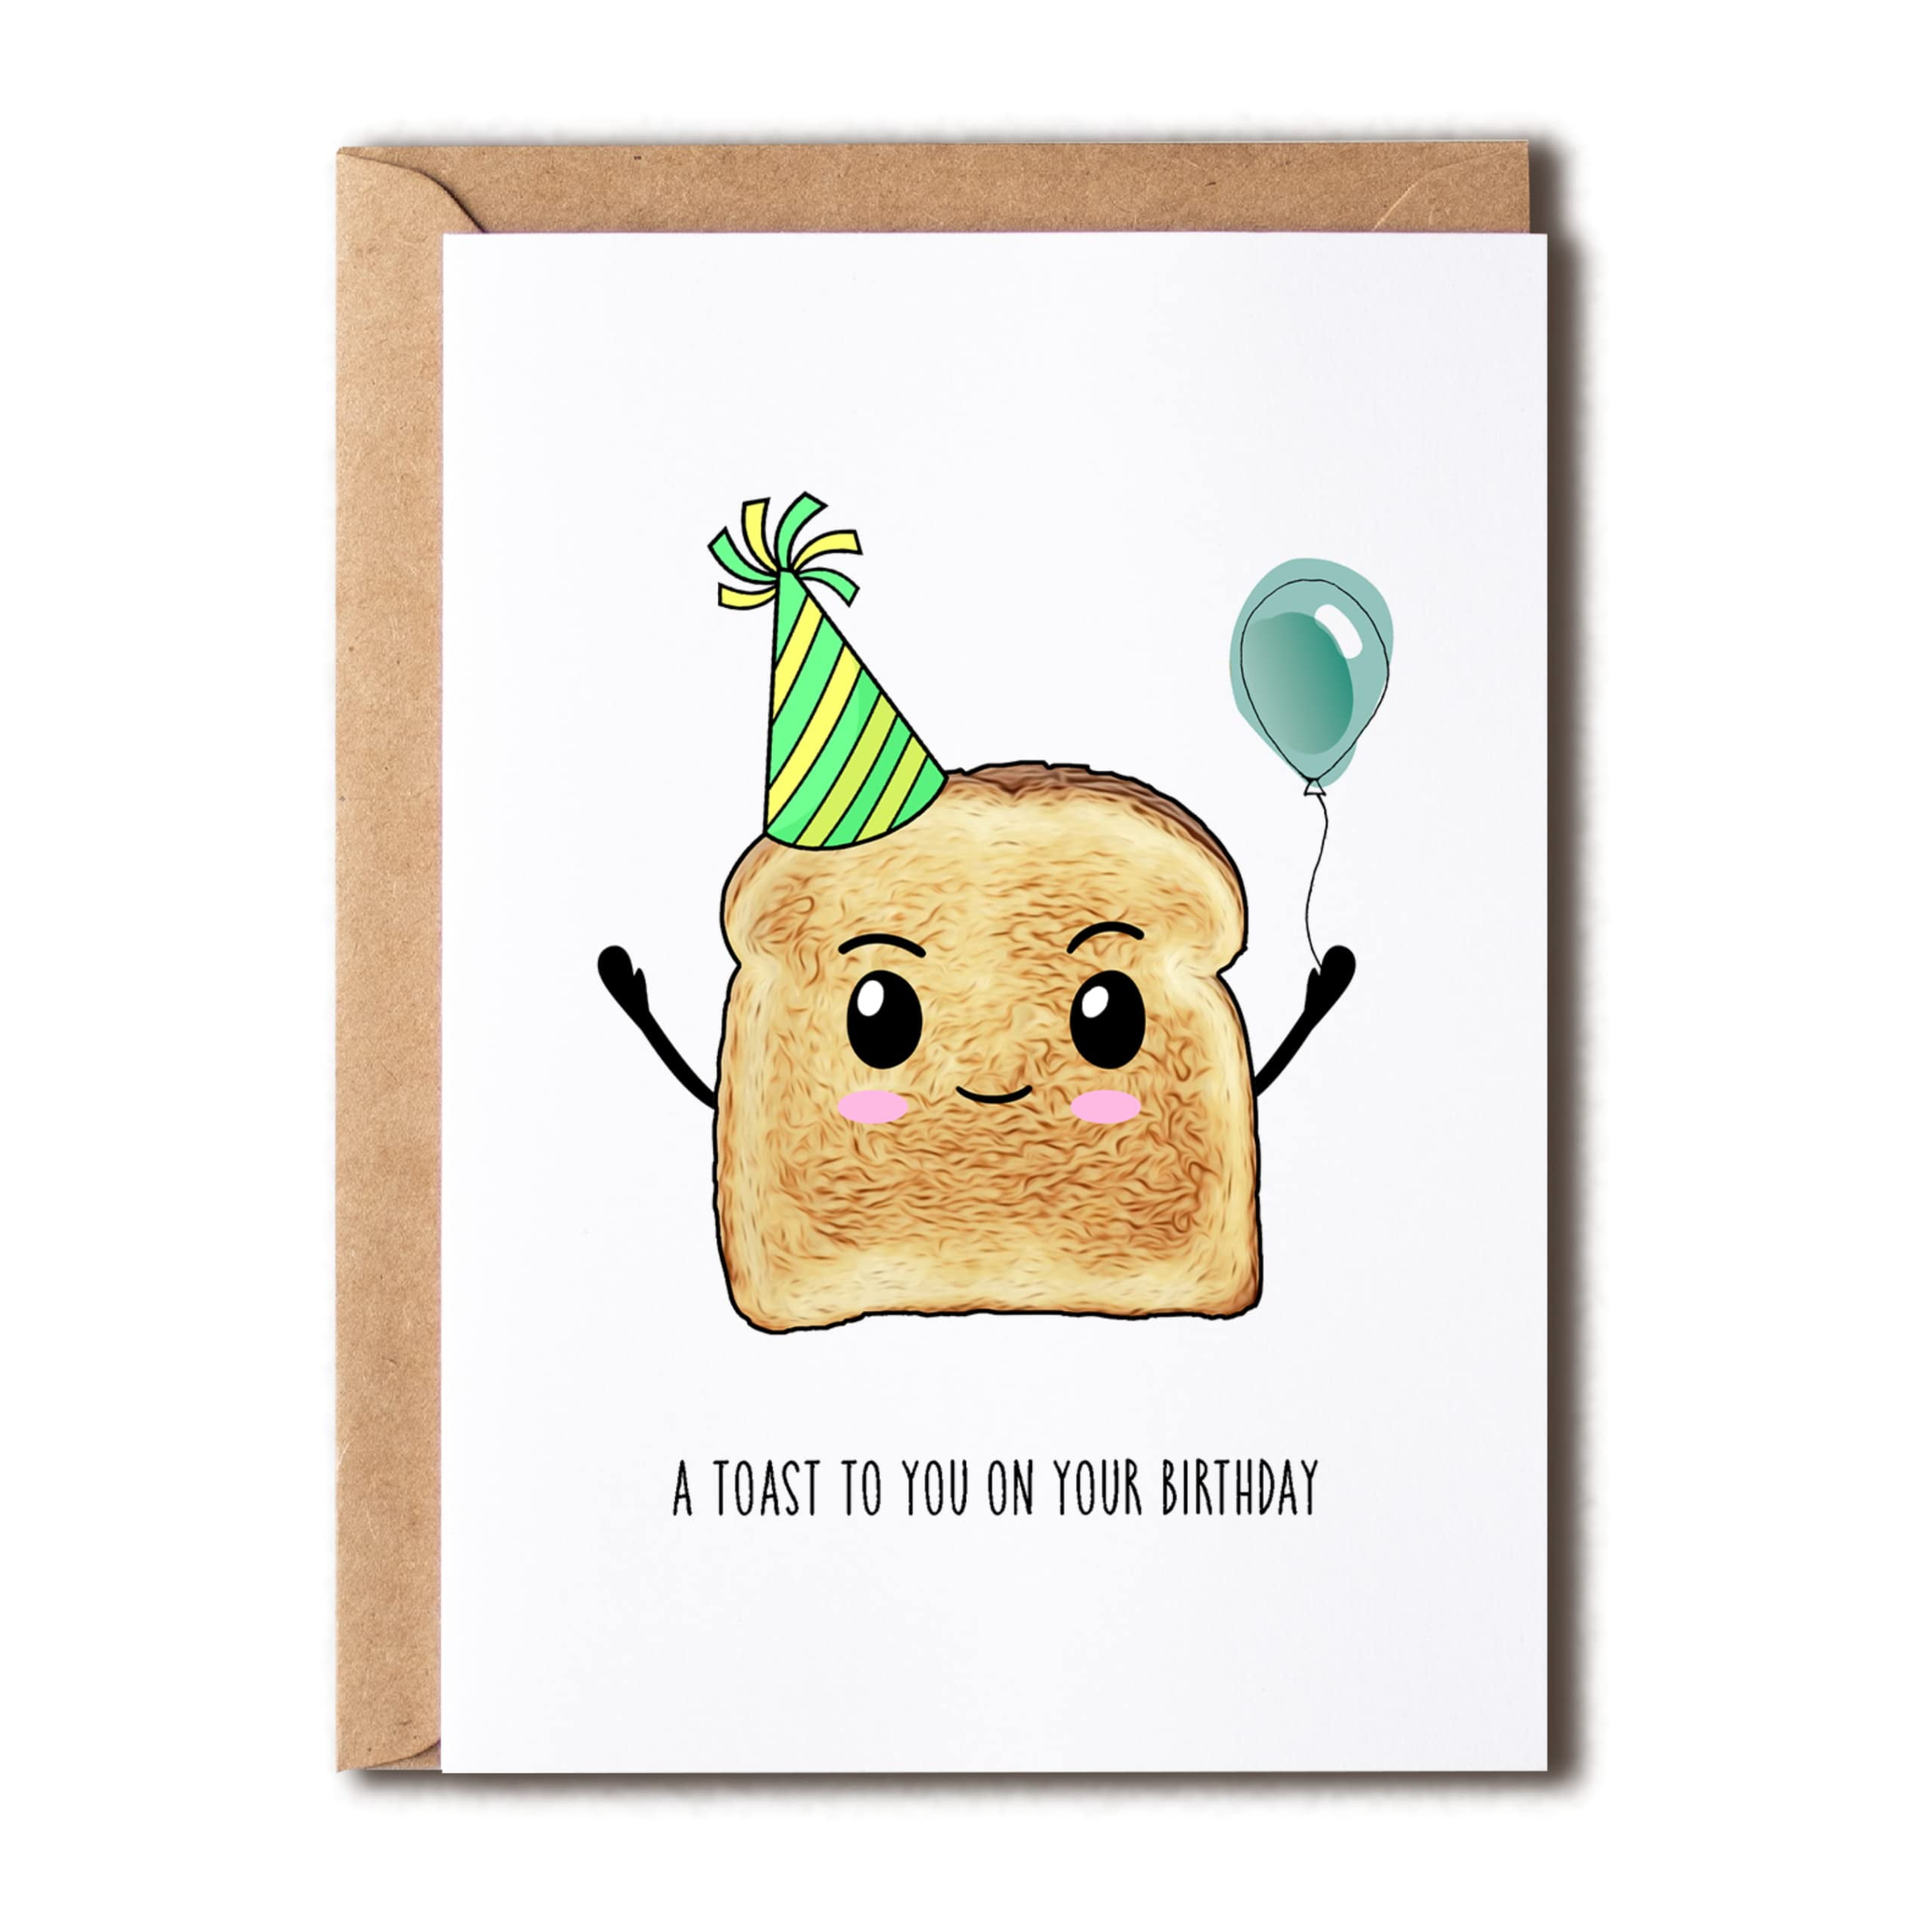 KrysDesigns Funny Birthday Card - A Toast To You On Your Birthday Card - Funny Pun Birthday Card, 5 x 7 inches - Walmart.com